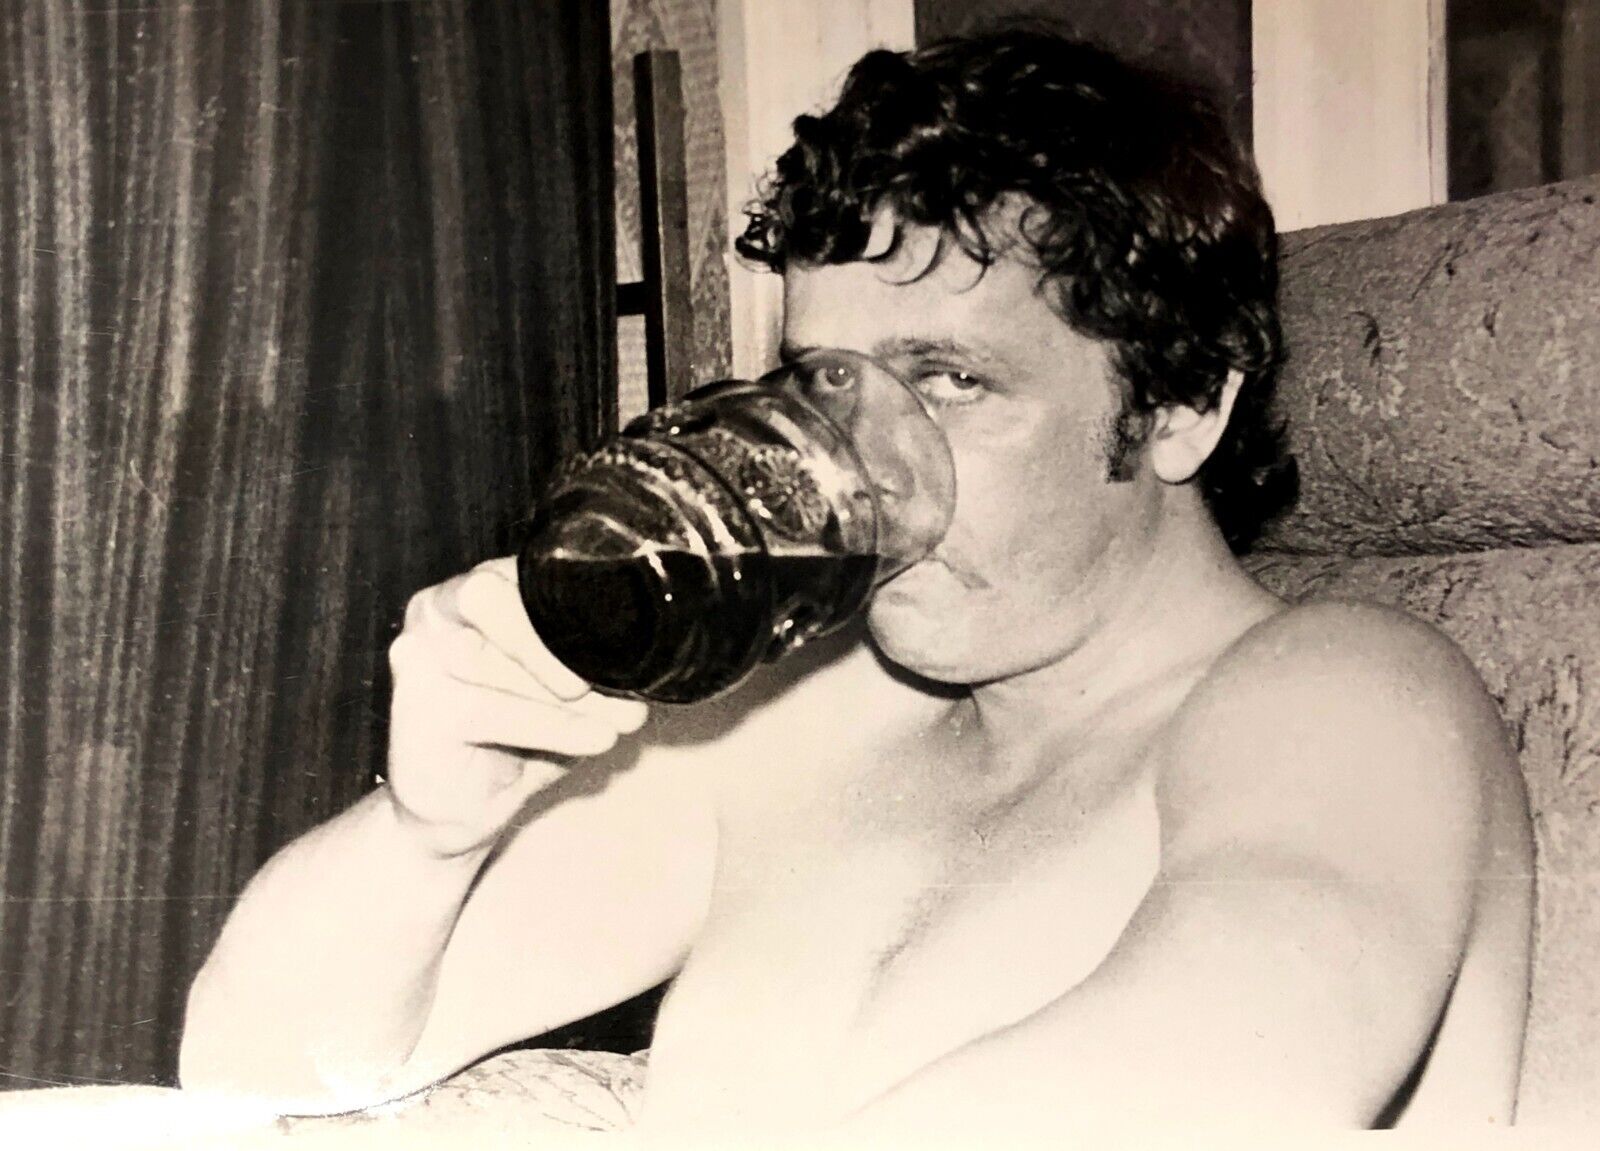 1970s Shirtless Guy Man drinking beer Beautiful Eyes Gay int Vintage Photo